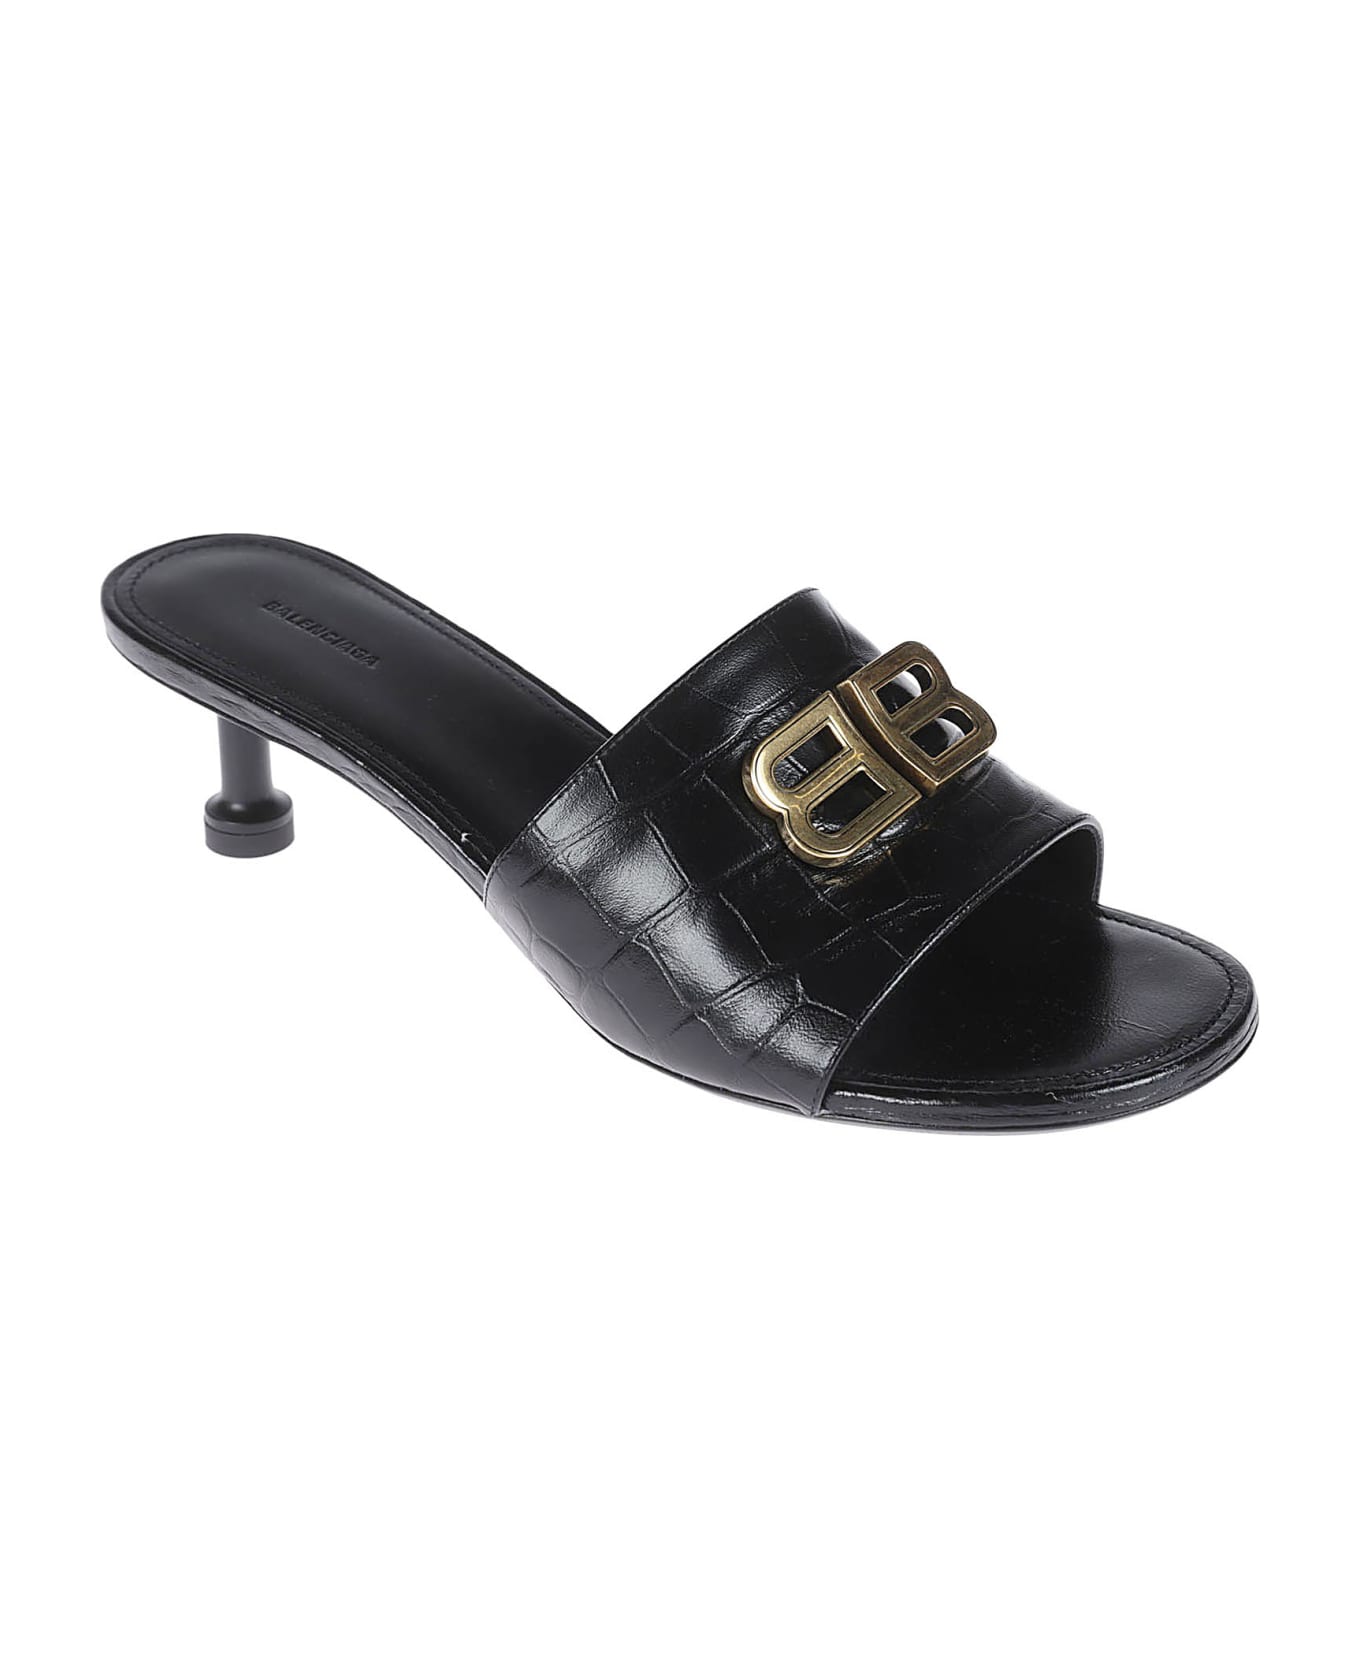 Balenciaga Groupie Sandals - Black/Gold